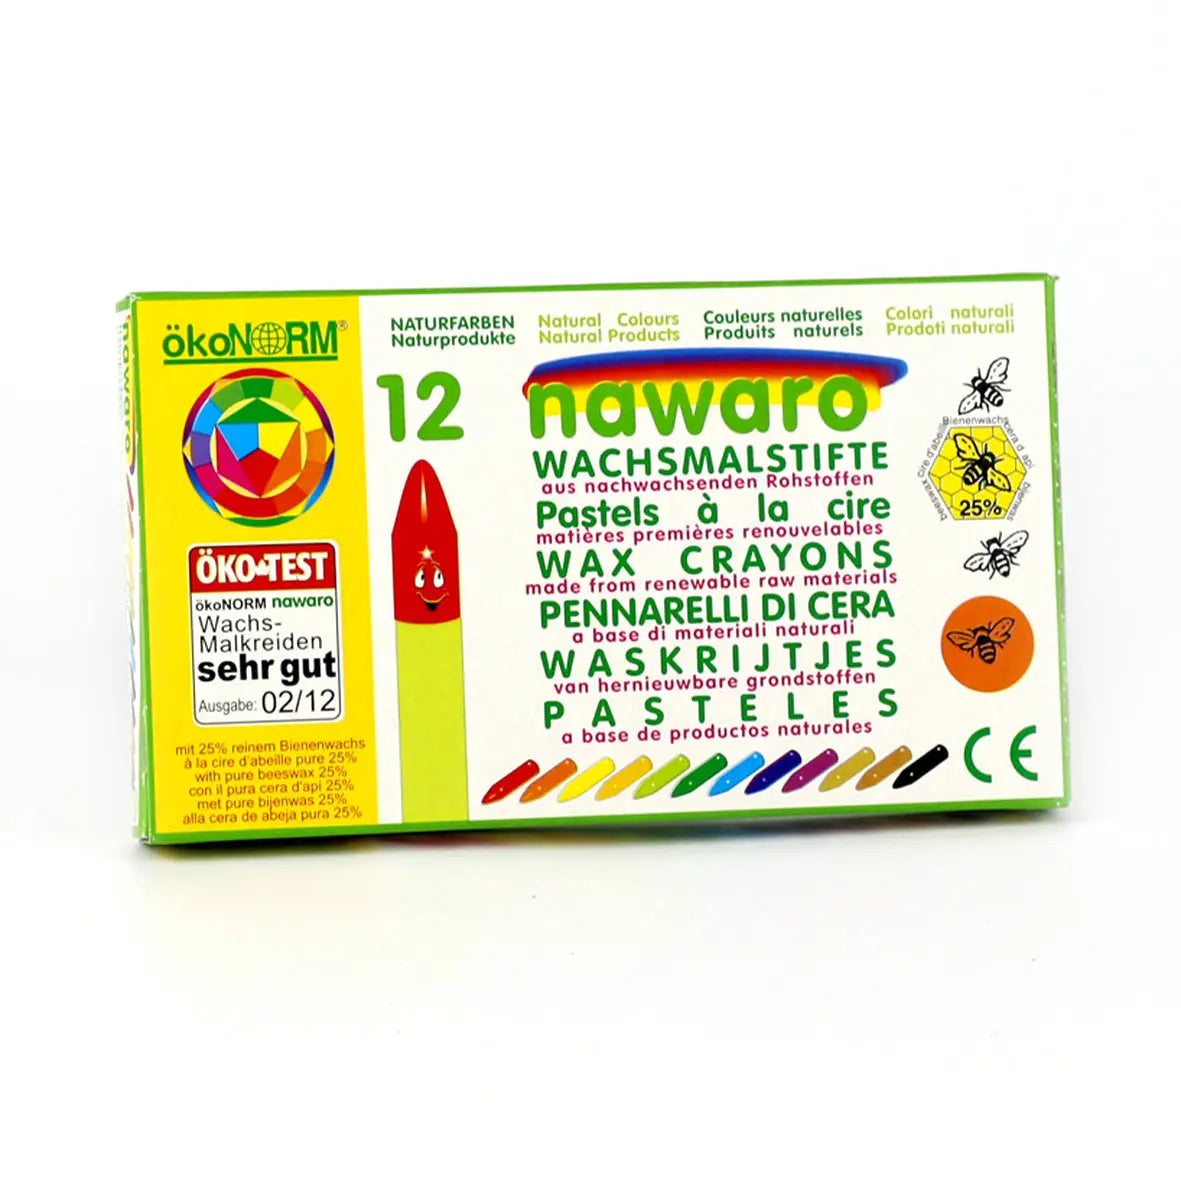 Non-toxic crayons